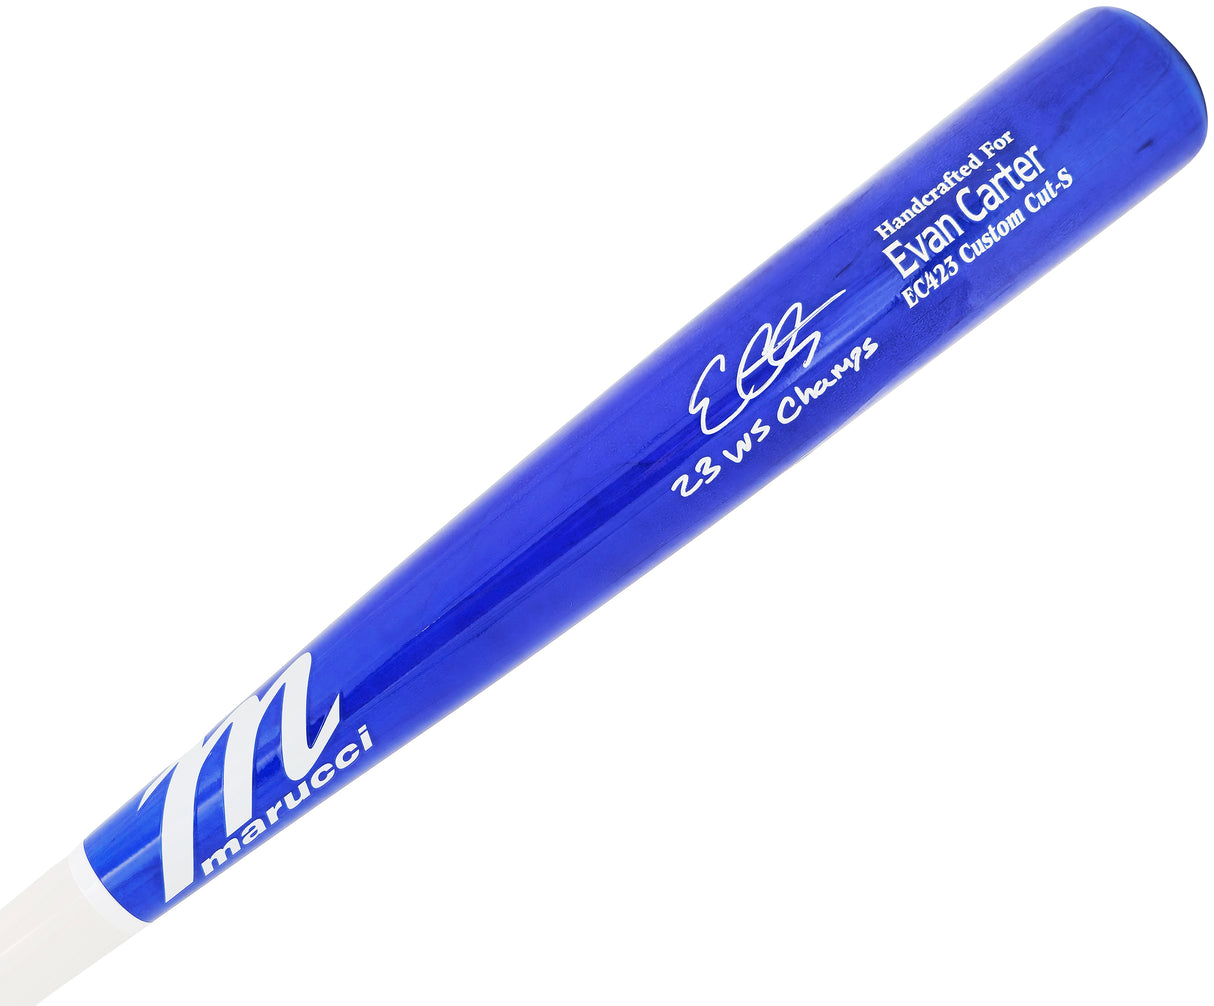 Evan Carter Autographed Blue & White Marucci Player Model Baseball Bat Texas Rangers "23 WS Champs" Beckett BAS Witness Stock #224408